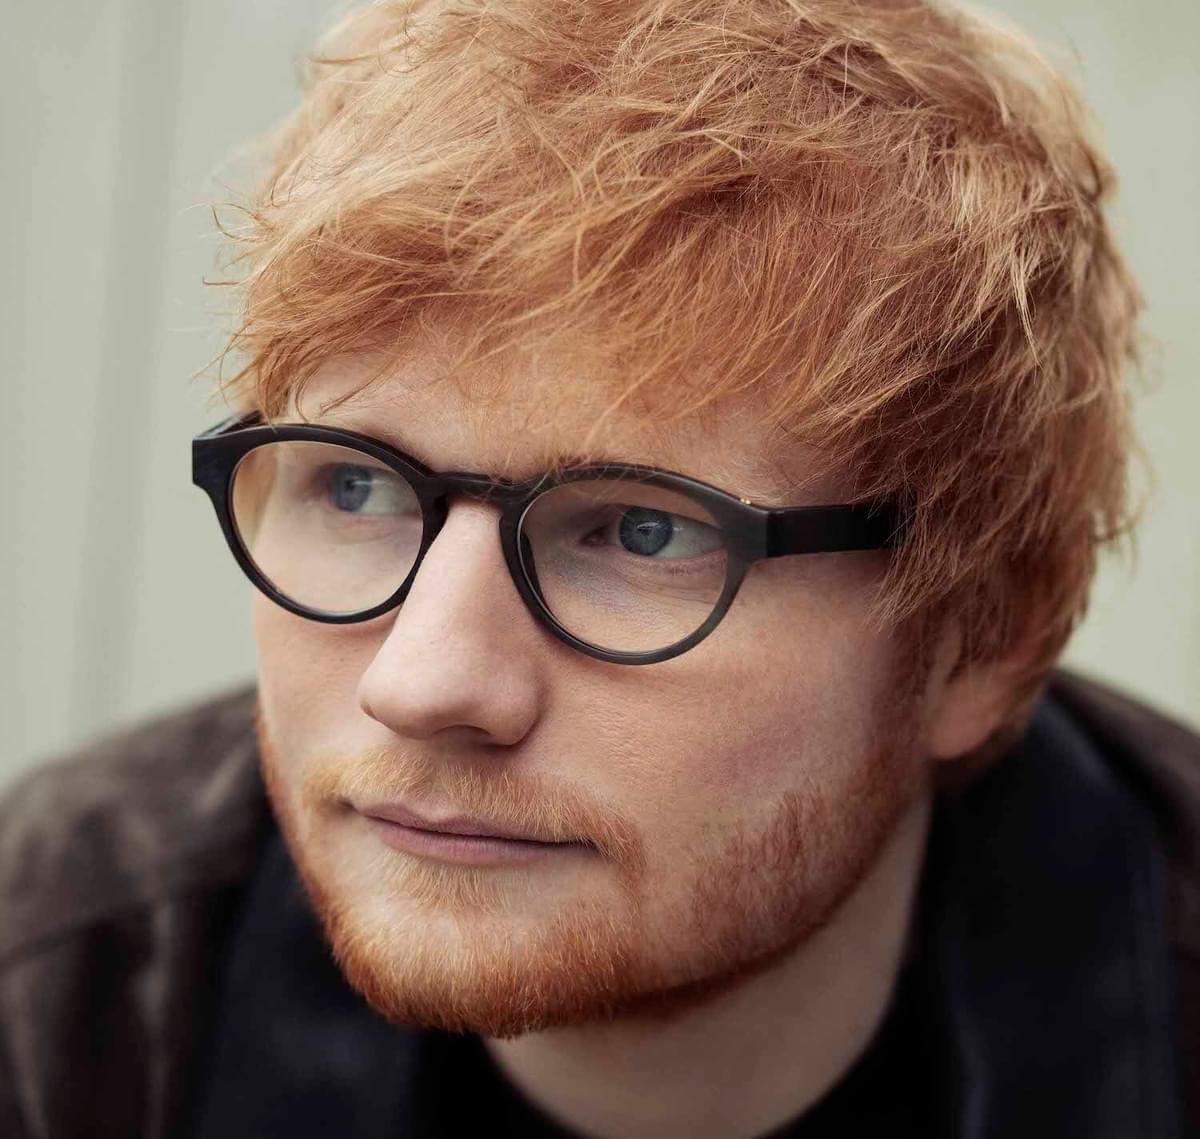 Ed sheeran collaborations project